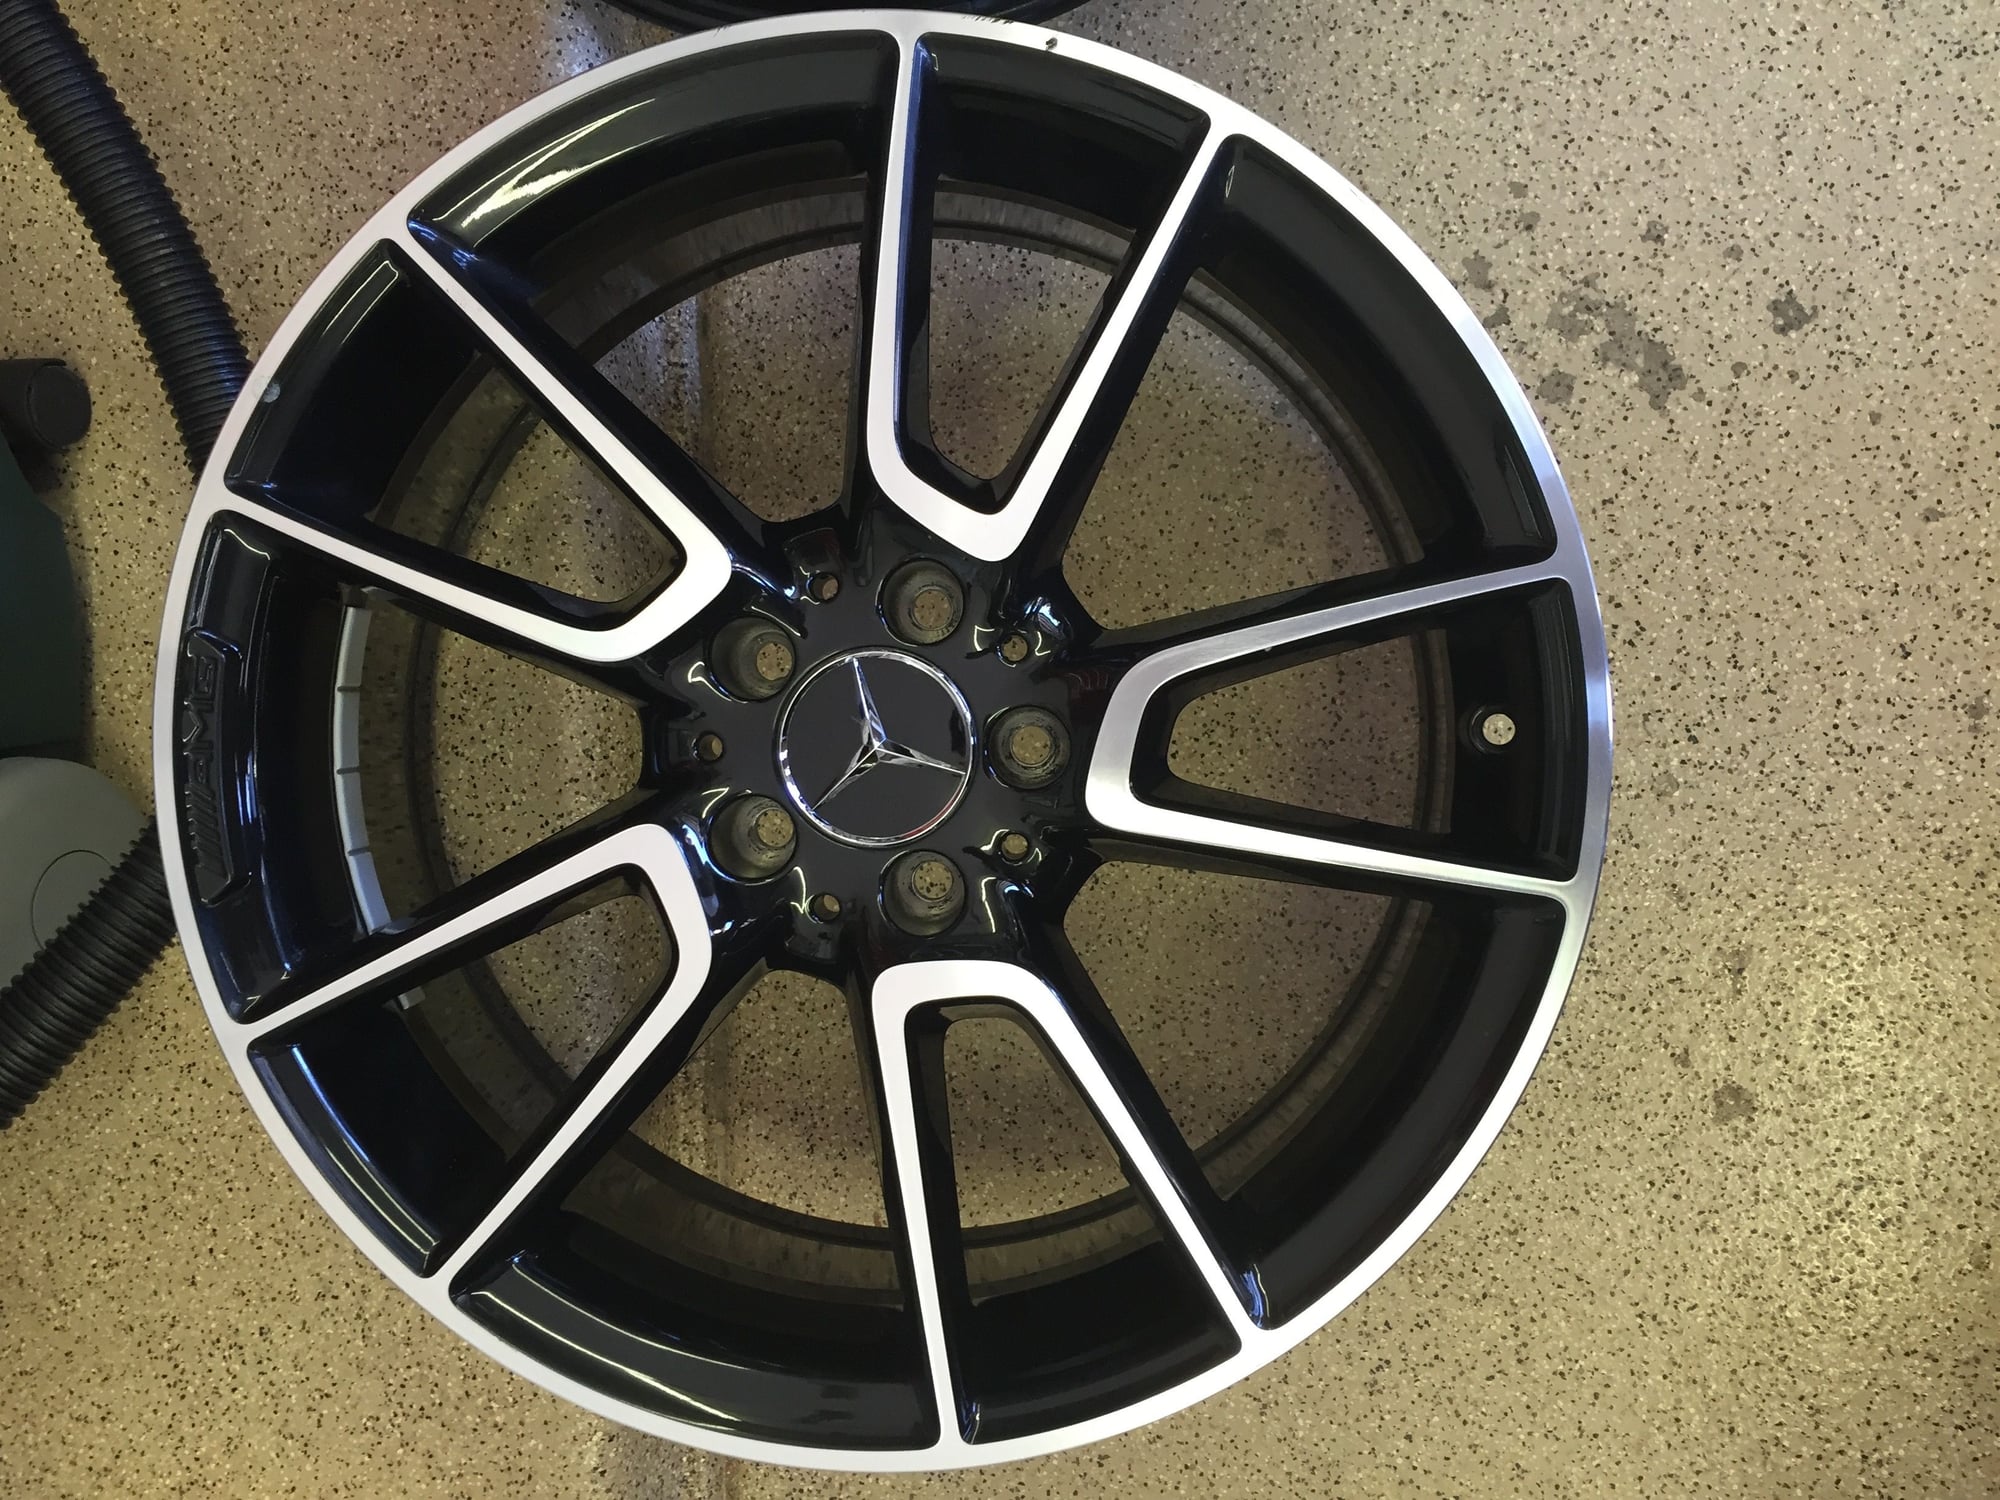 Wheels and Tires/Axles - C300 / C450 / C43 OEM wheels - 19-inch AMG split 5-spoke wheels (Black) - Used - 2015 to 2018 Mercedes-Benz C300 - Phoenix, AZ 85018, United States